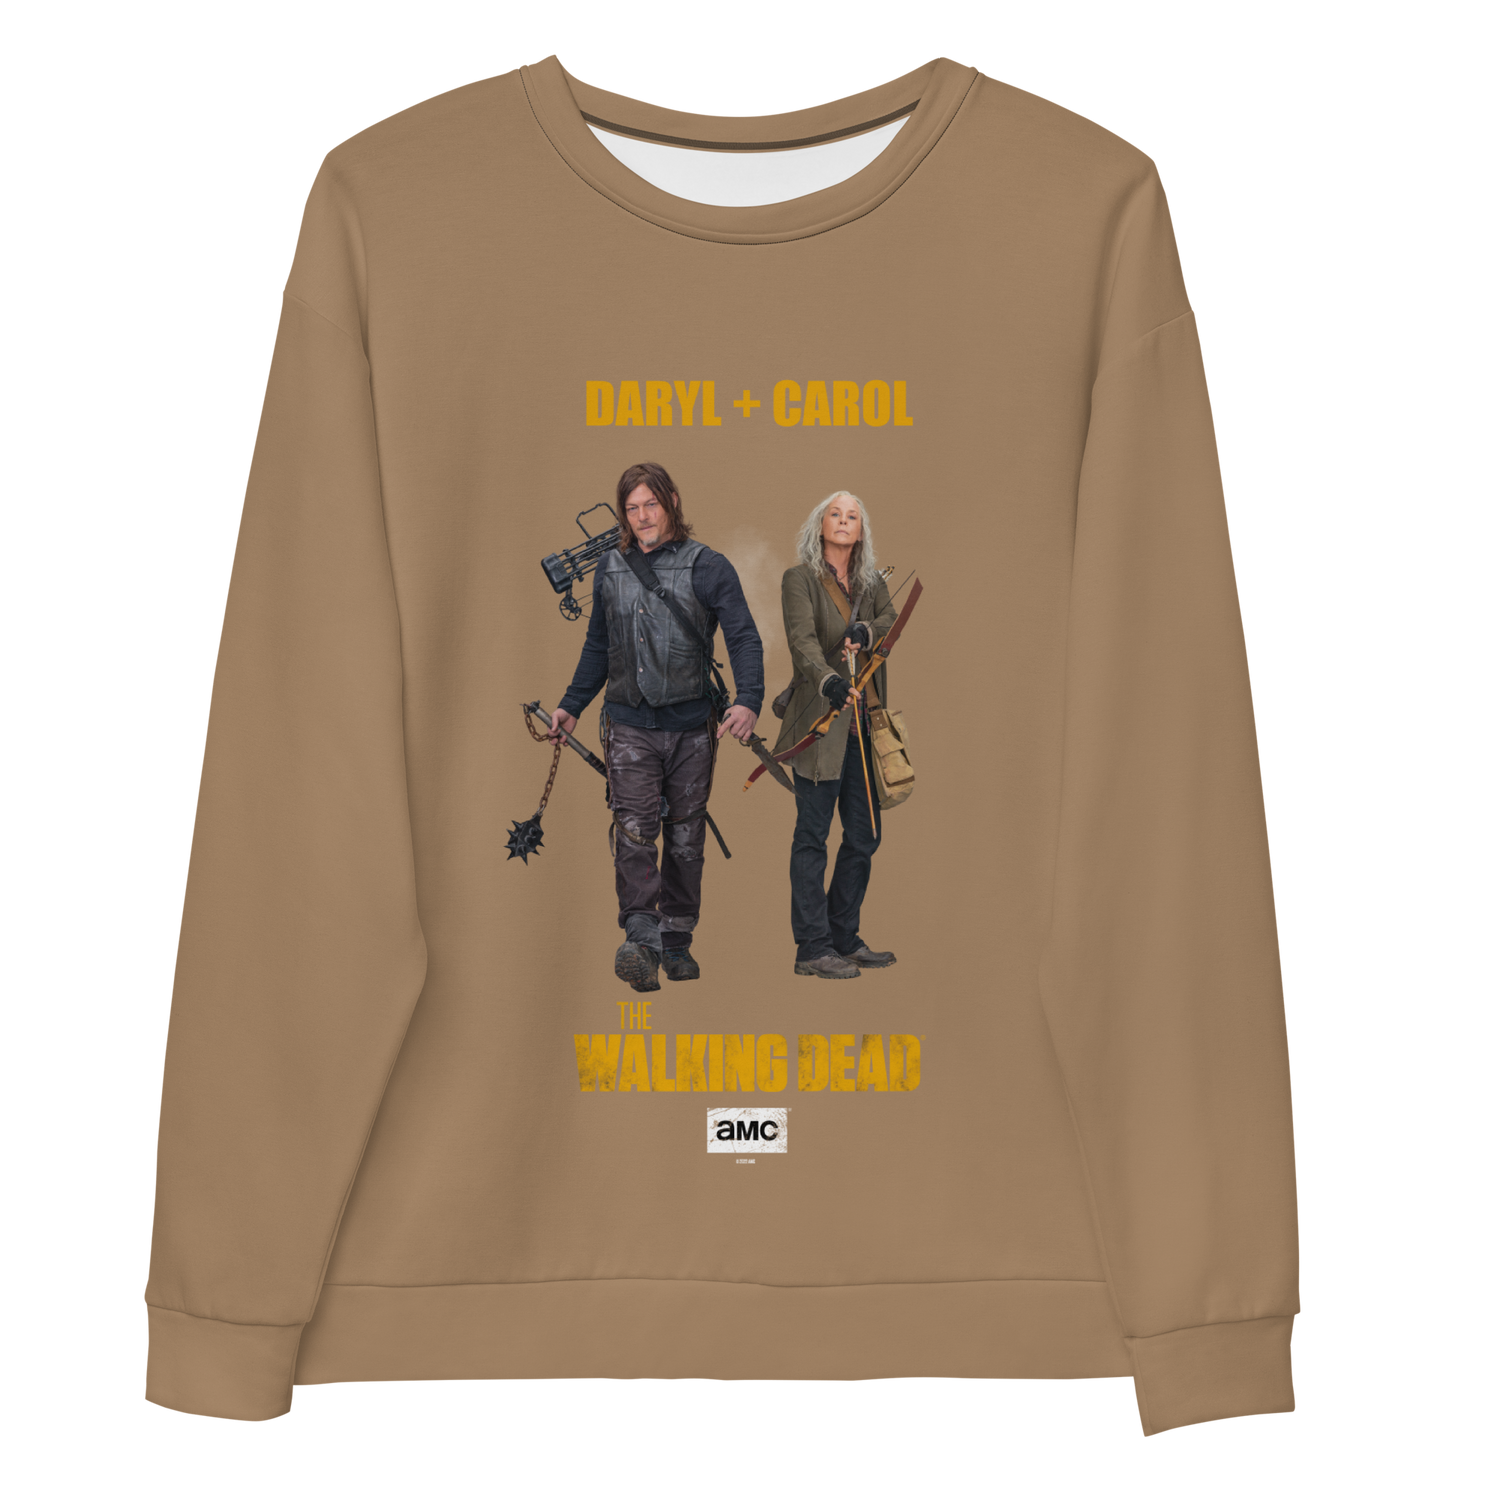 The Walking Dead Daryl + Carol Unisex Crew Neck Sweatshirt